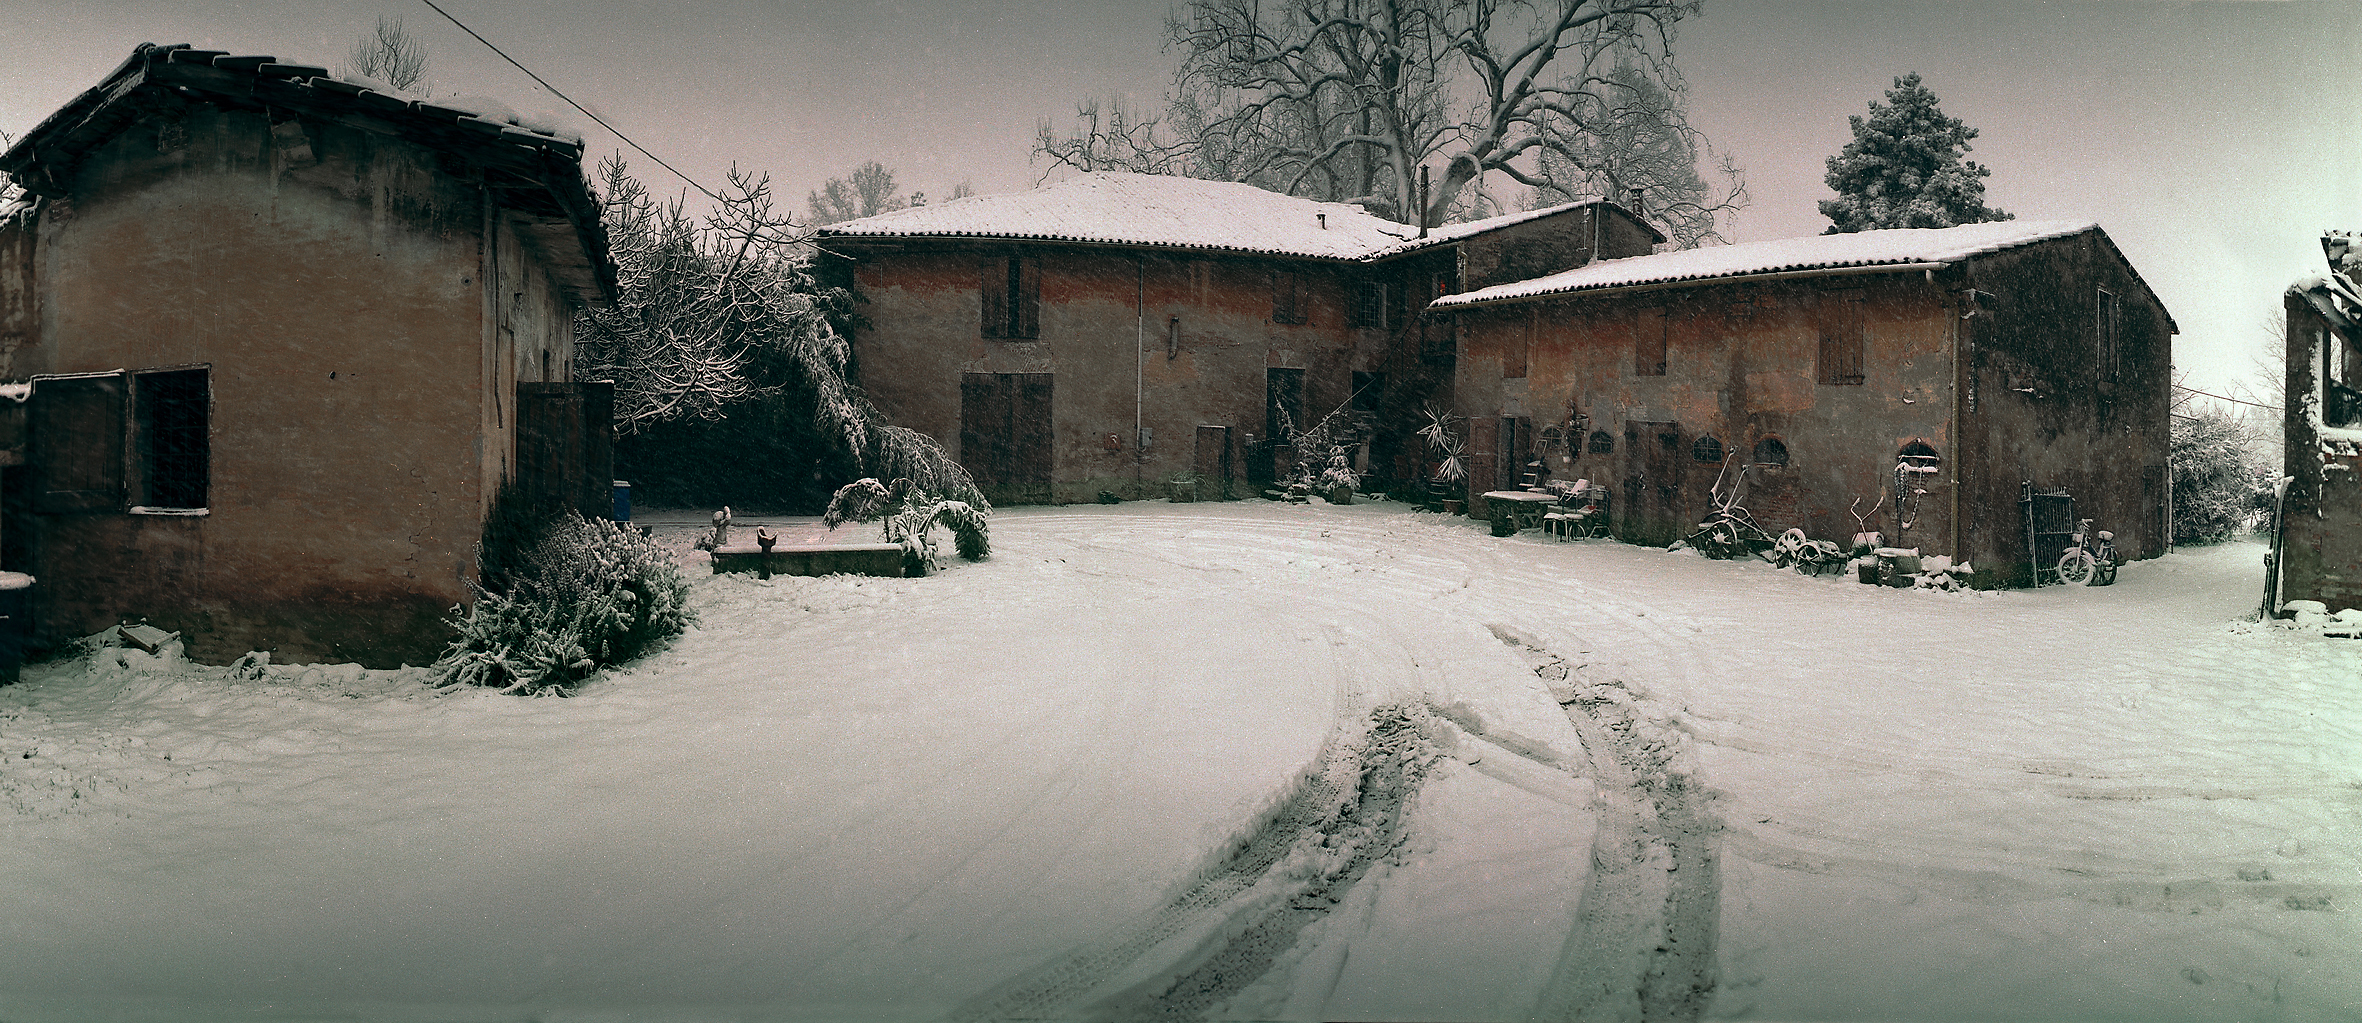 Bologna farmhouse in snow